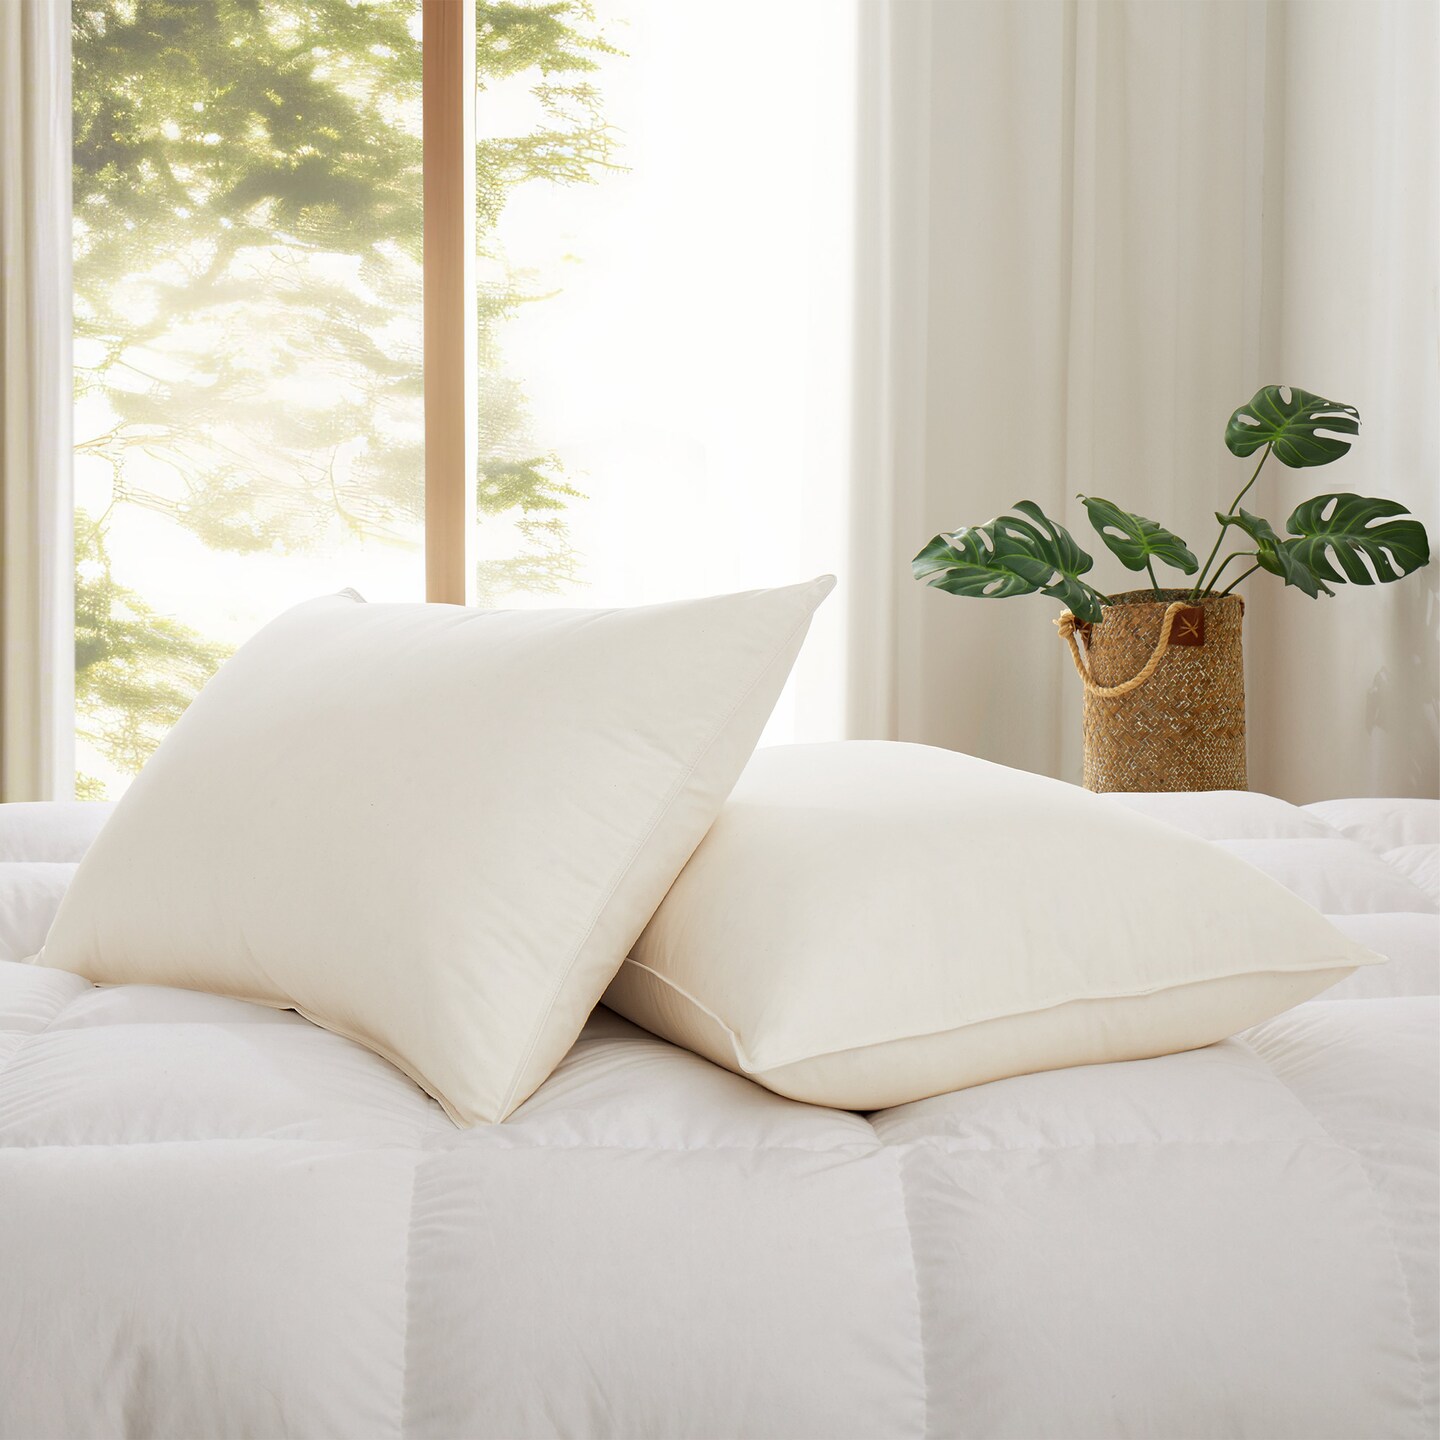 Puredown Organic Cotton Goose Down Feather Pillows Pillow-in-pillow Dual layer Sleeping Pillow Set of 2